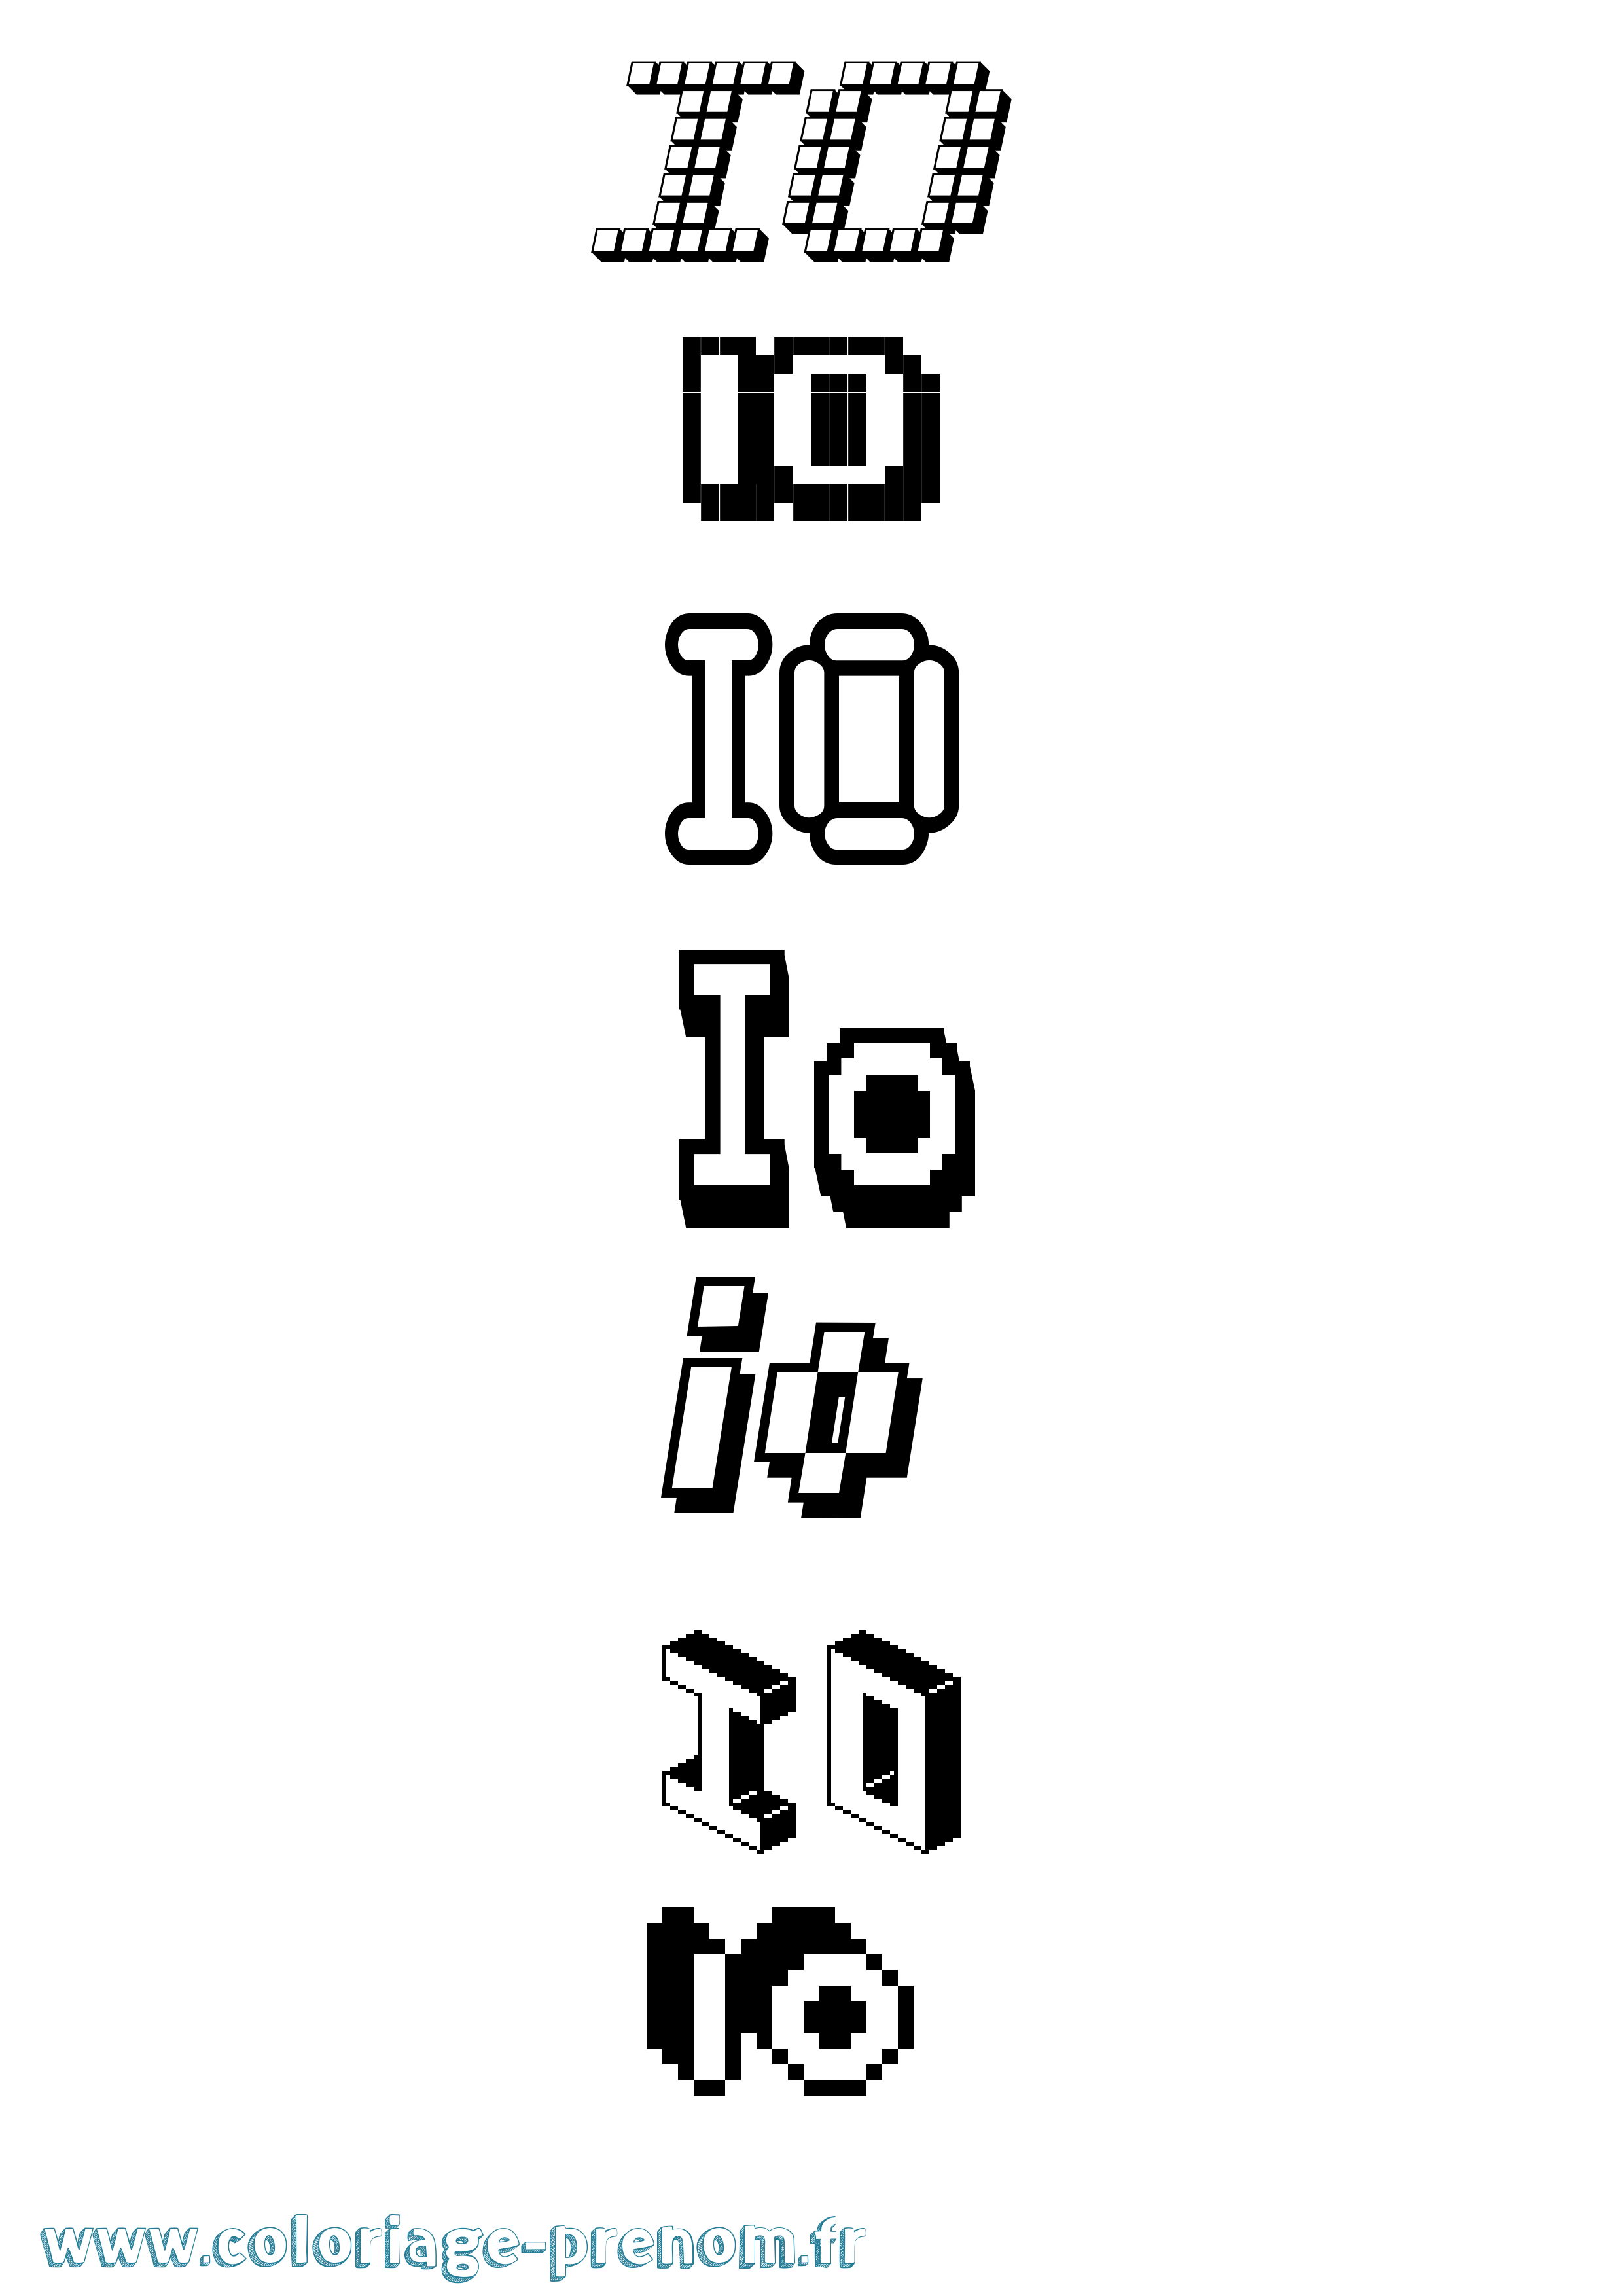 Coloriage prénom Io Pixel